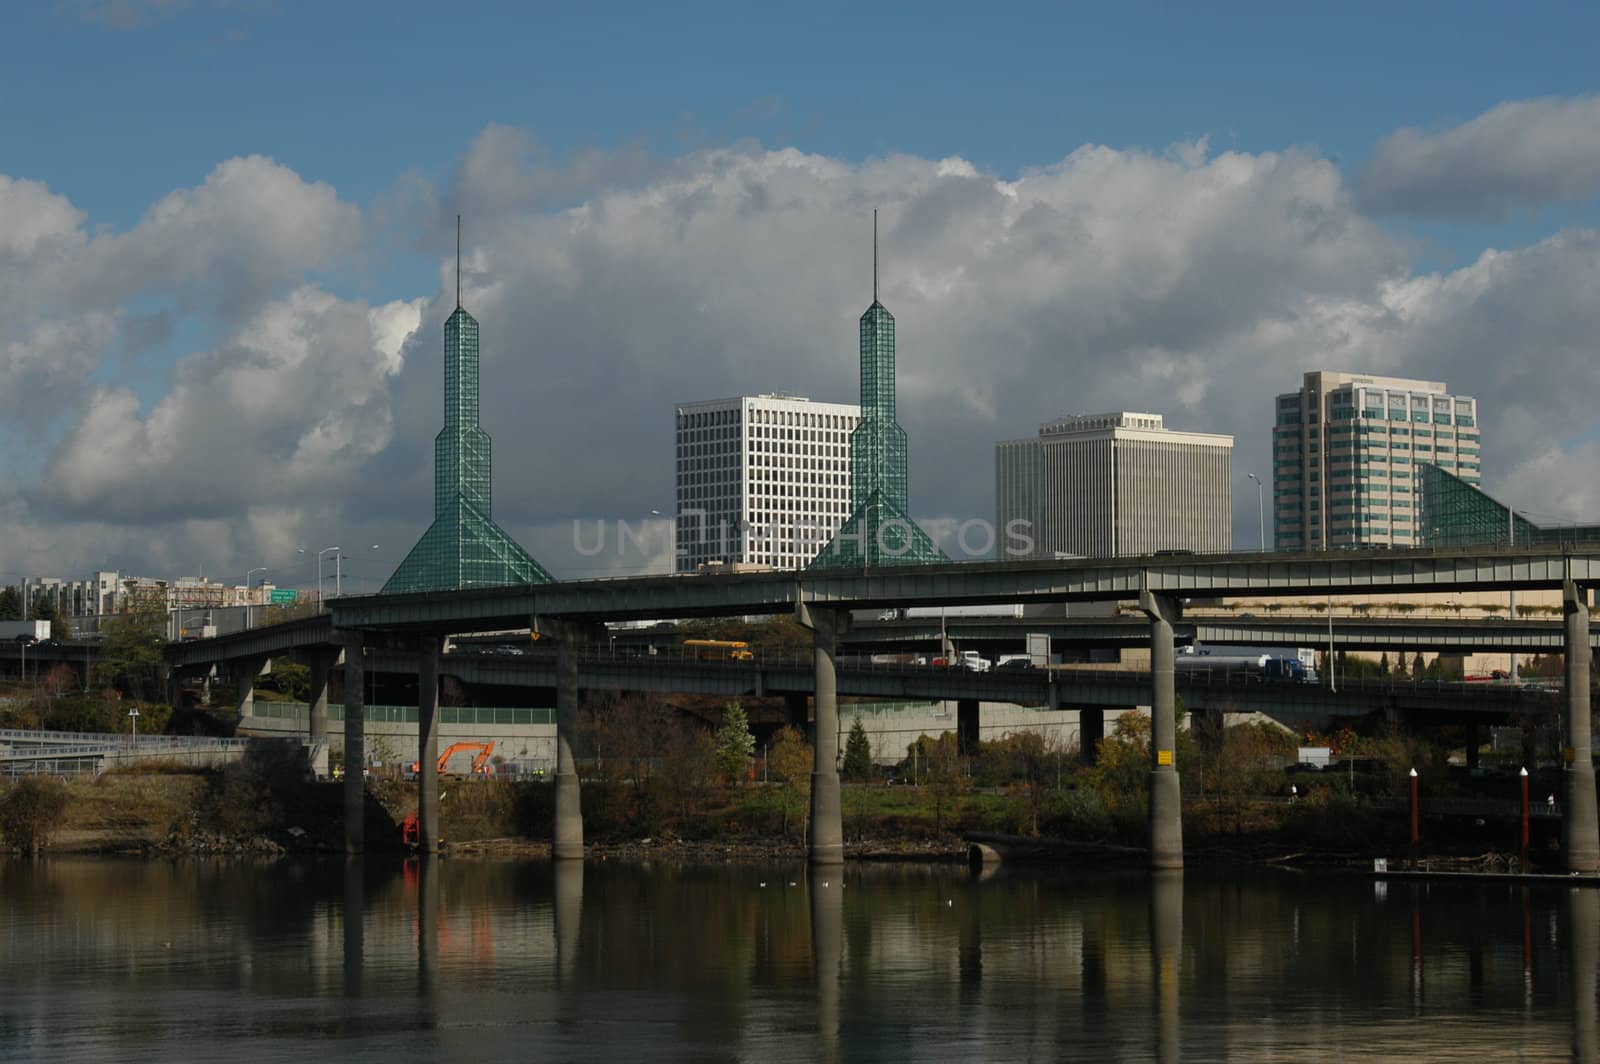 Bridge across the river by northwoodsphoto